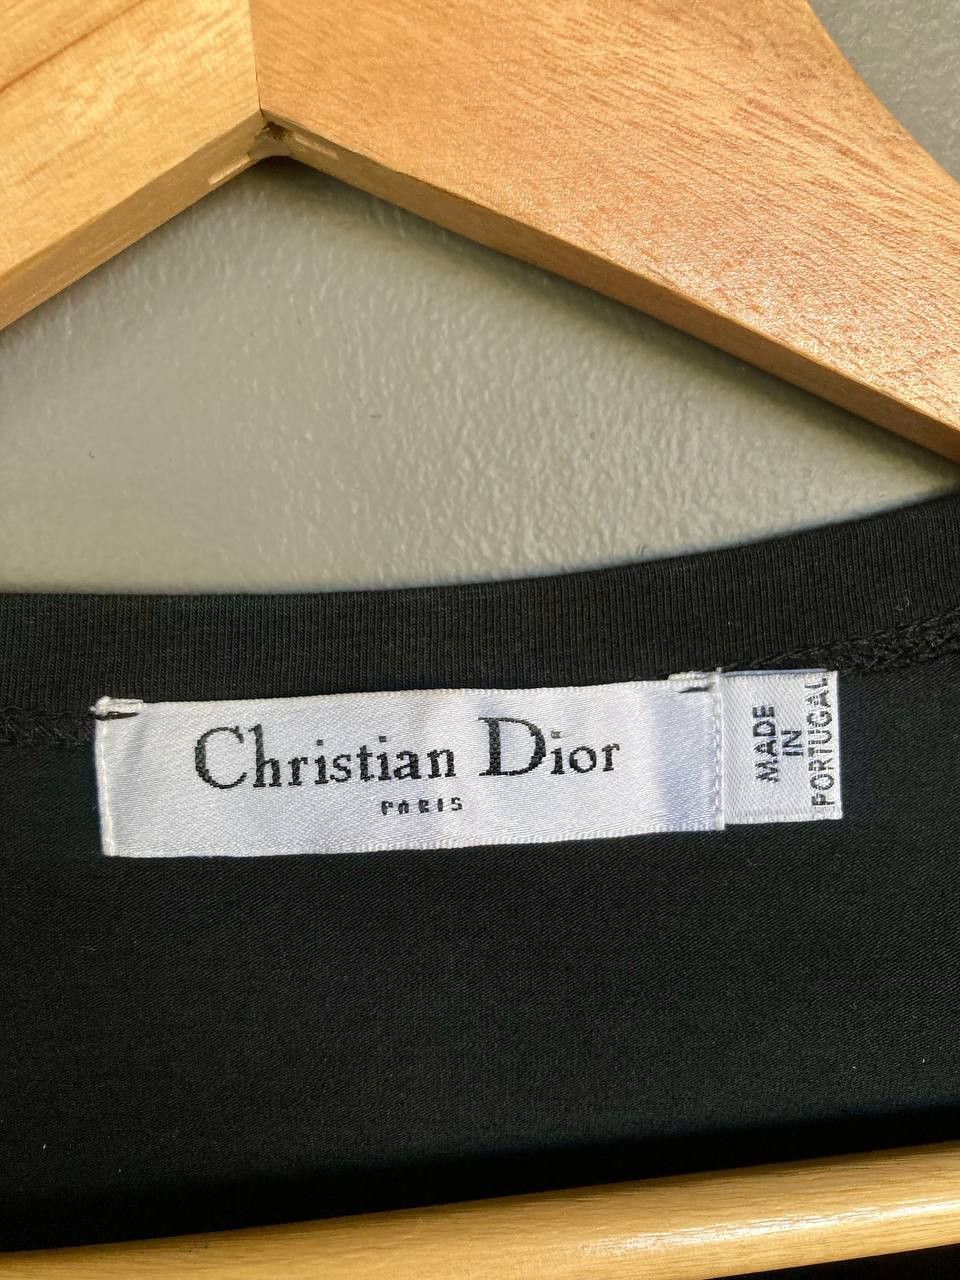 Christian Dior Monsieur - Christian Dior “Midnight Poison” Long Sleeves - 10